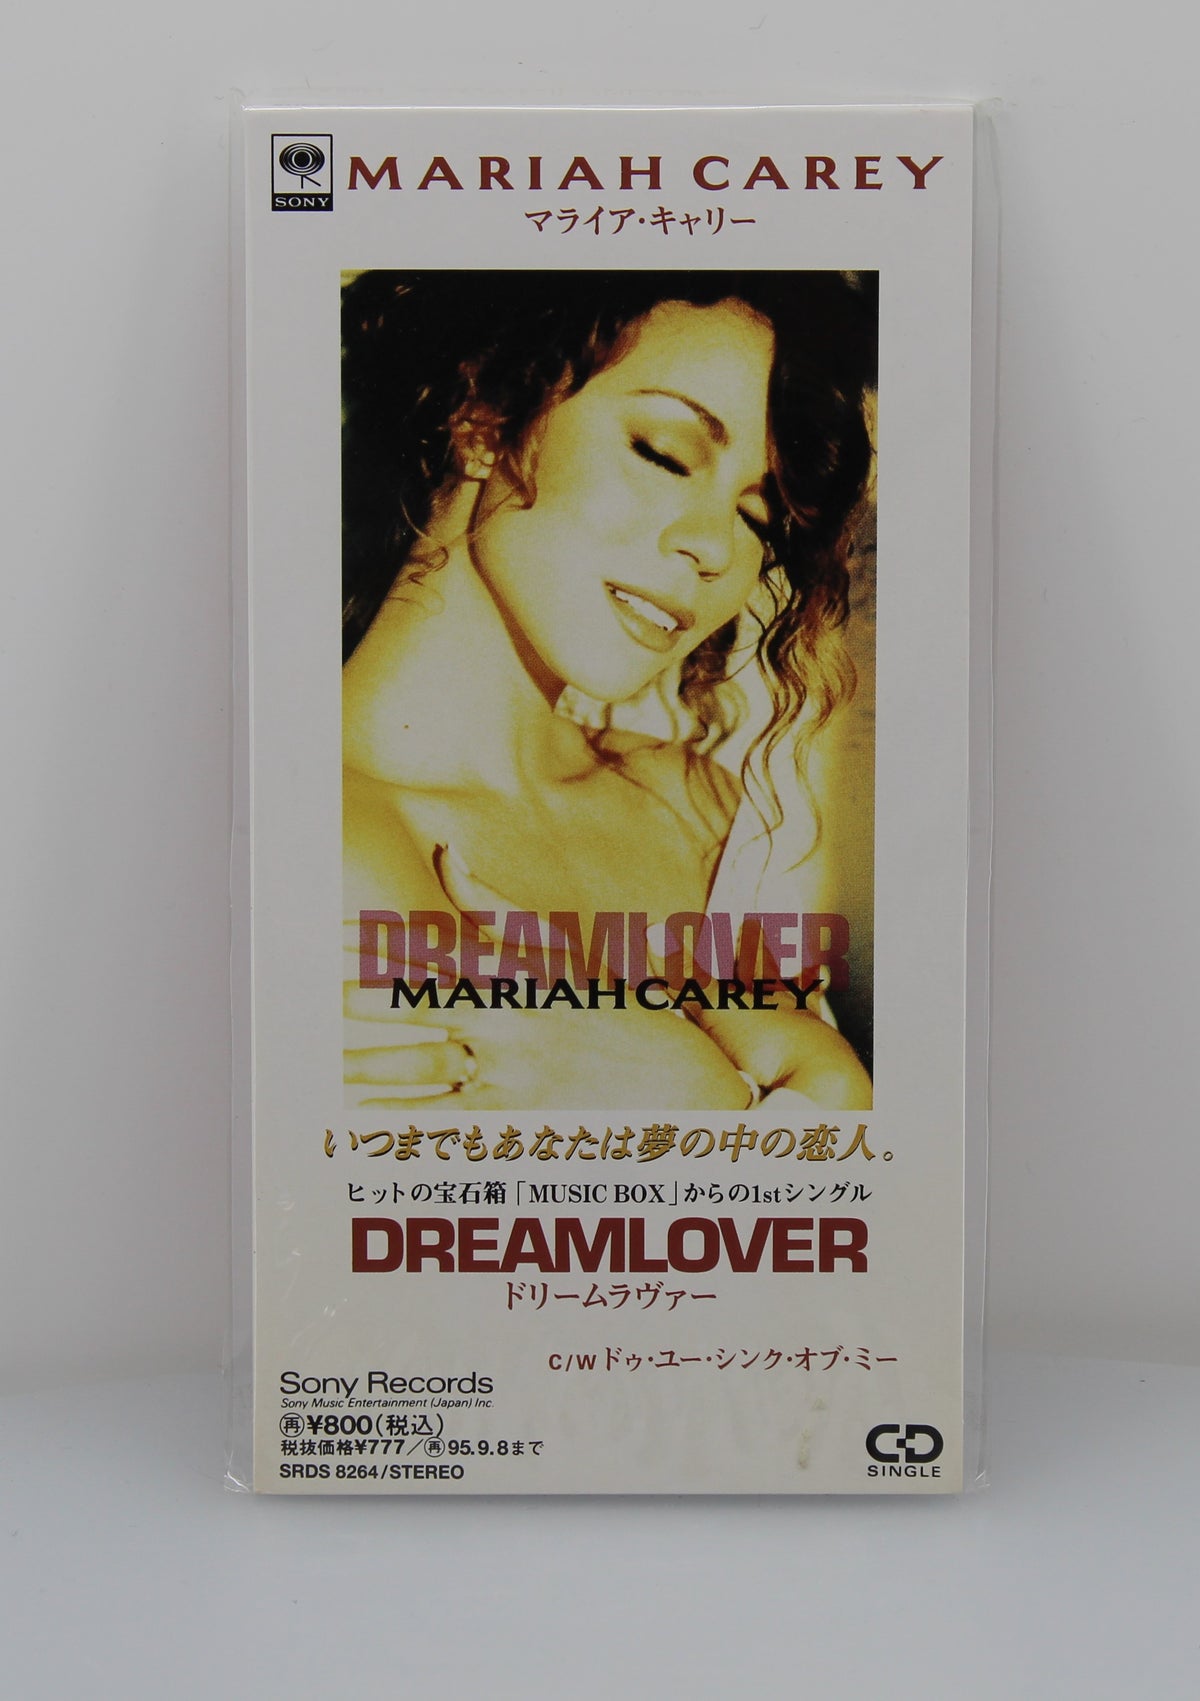 Mariah Carey – Dreamlover, CD, Mini, Single, Japan 1993